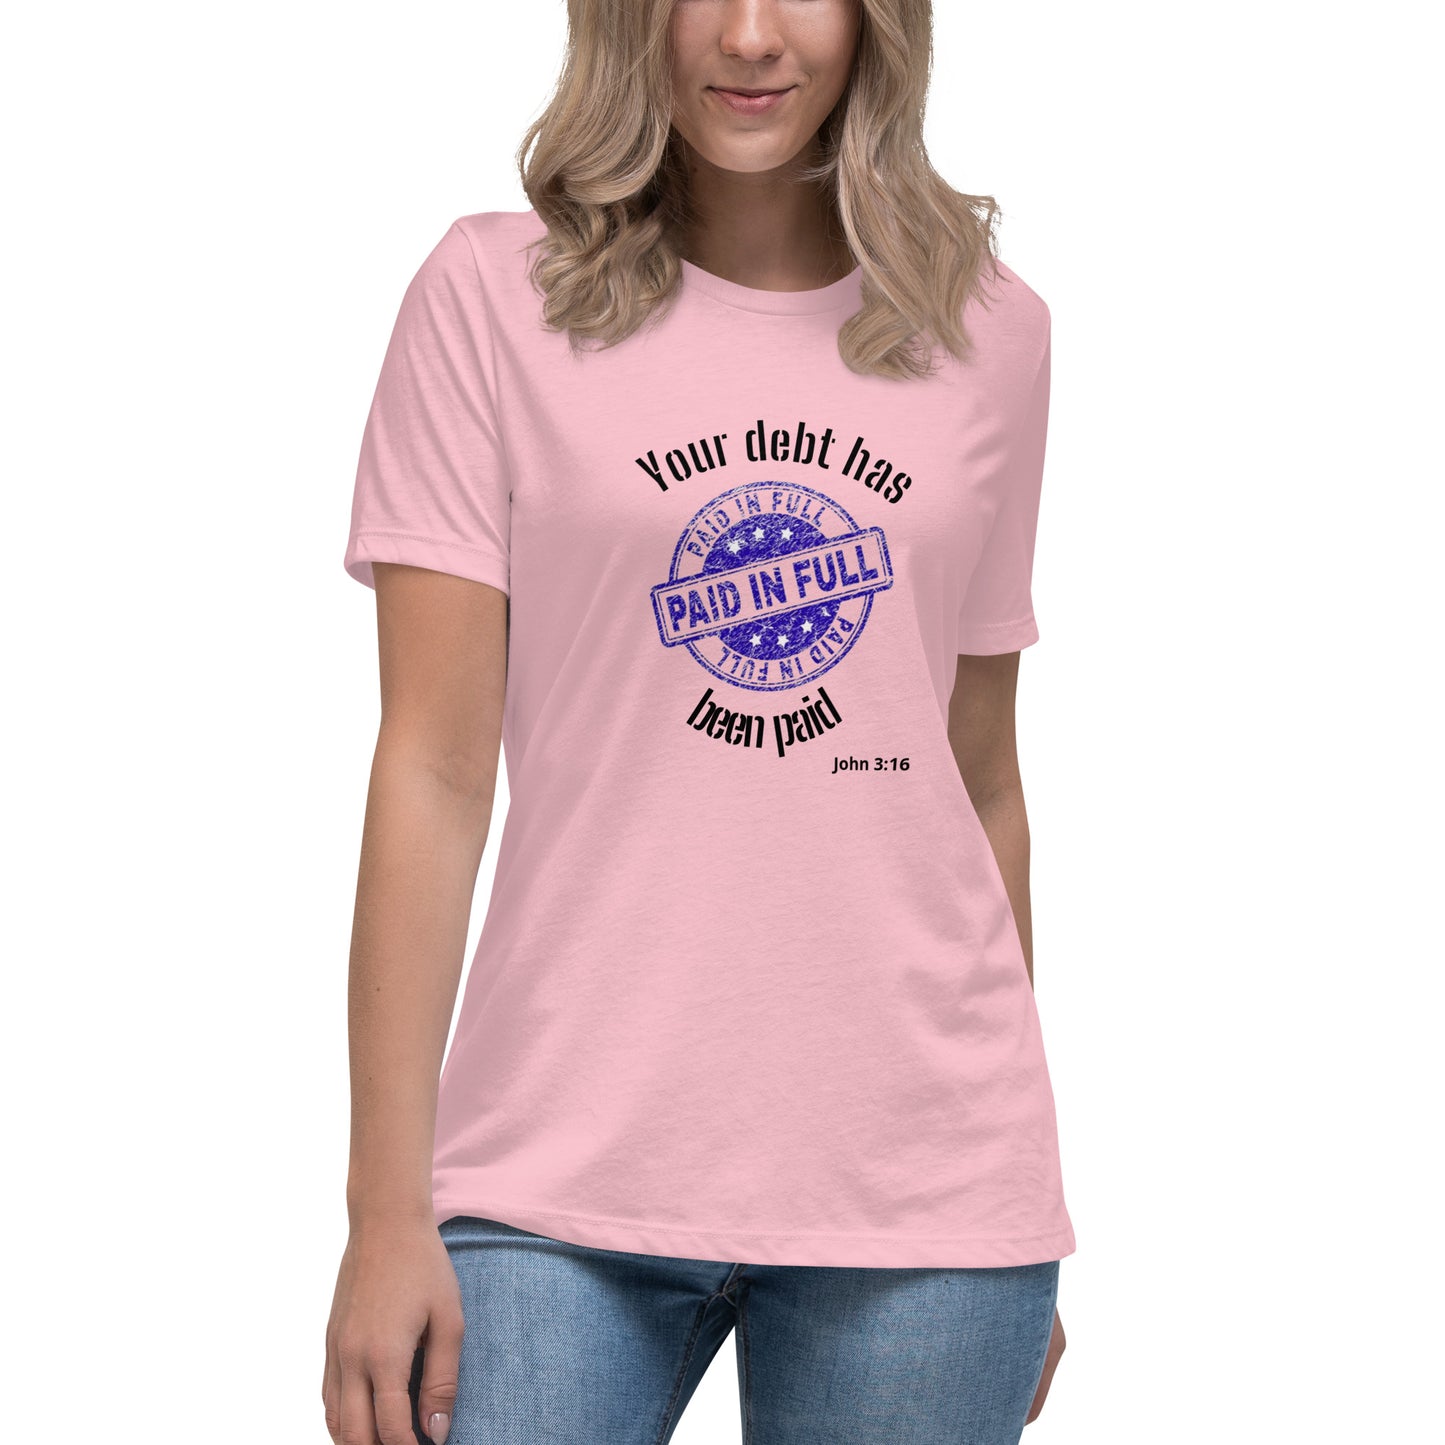 Pink christian tee shirt